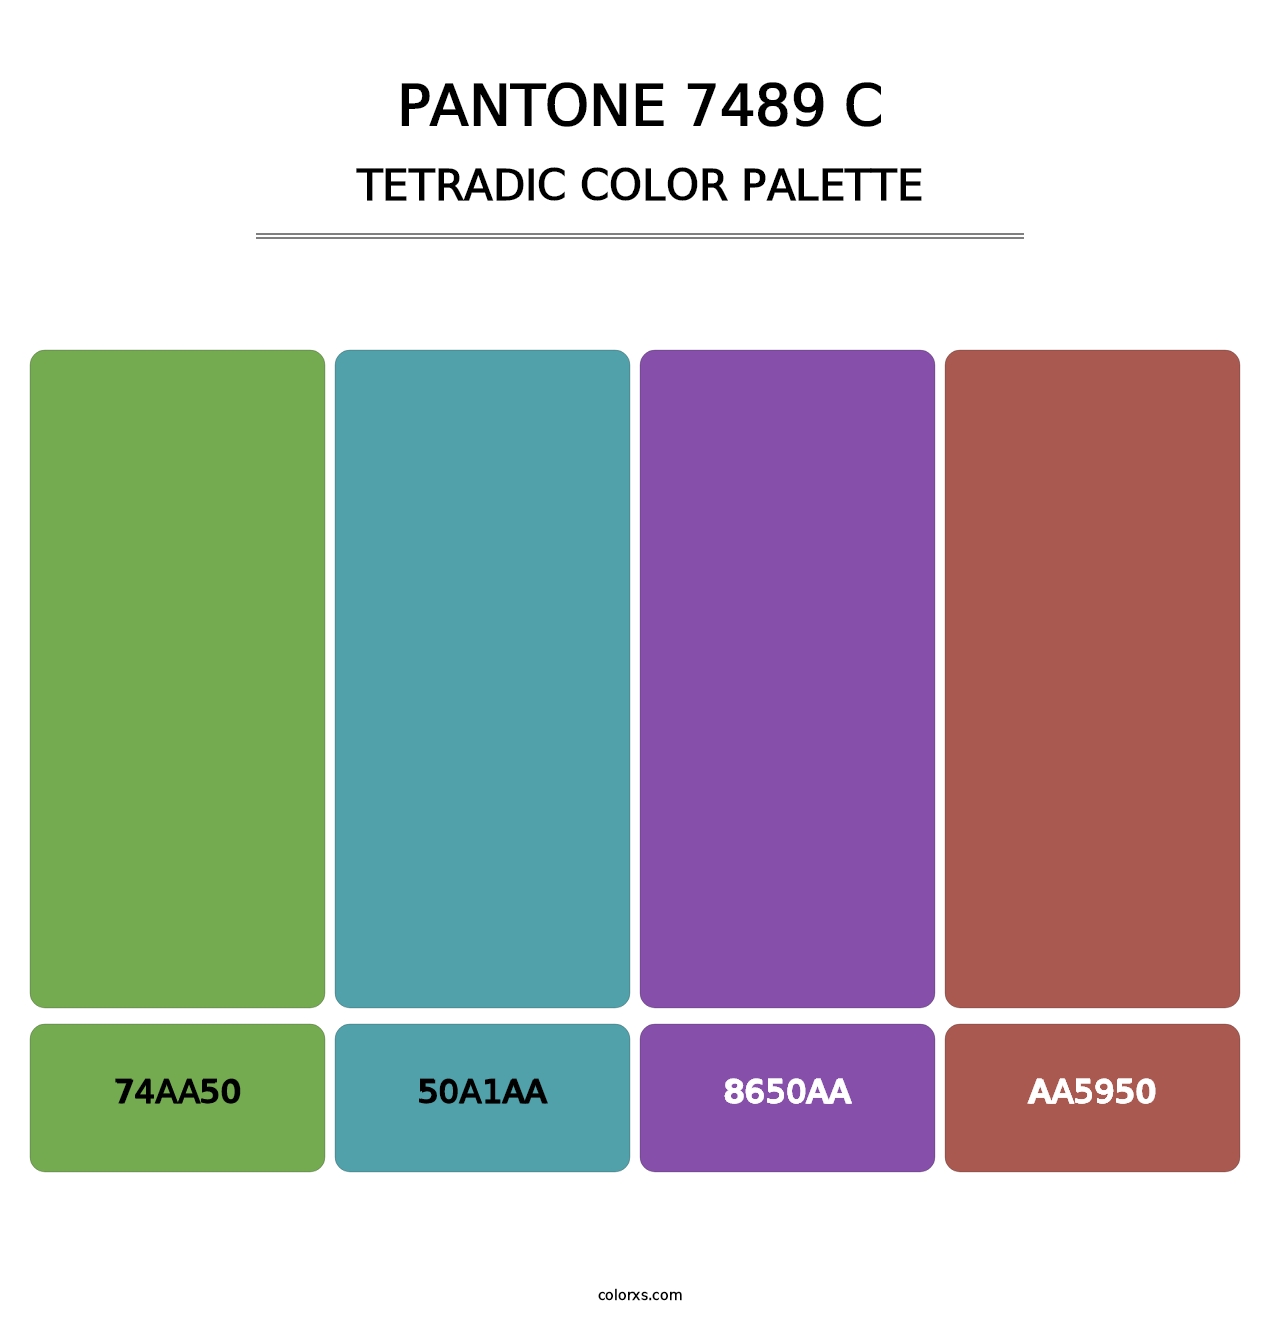 PANTONE 7489 C - Tetradic Color Palette